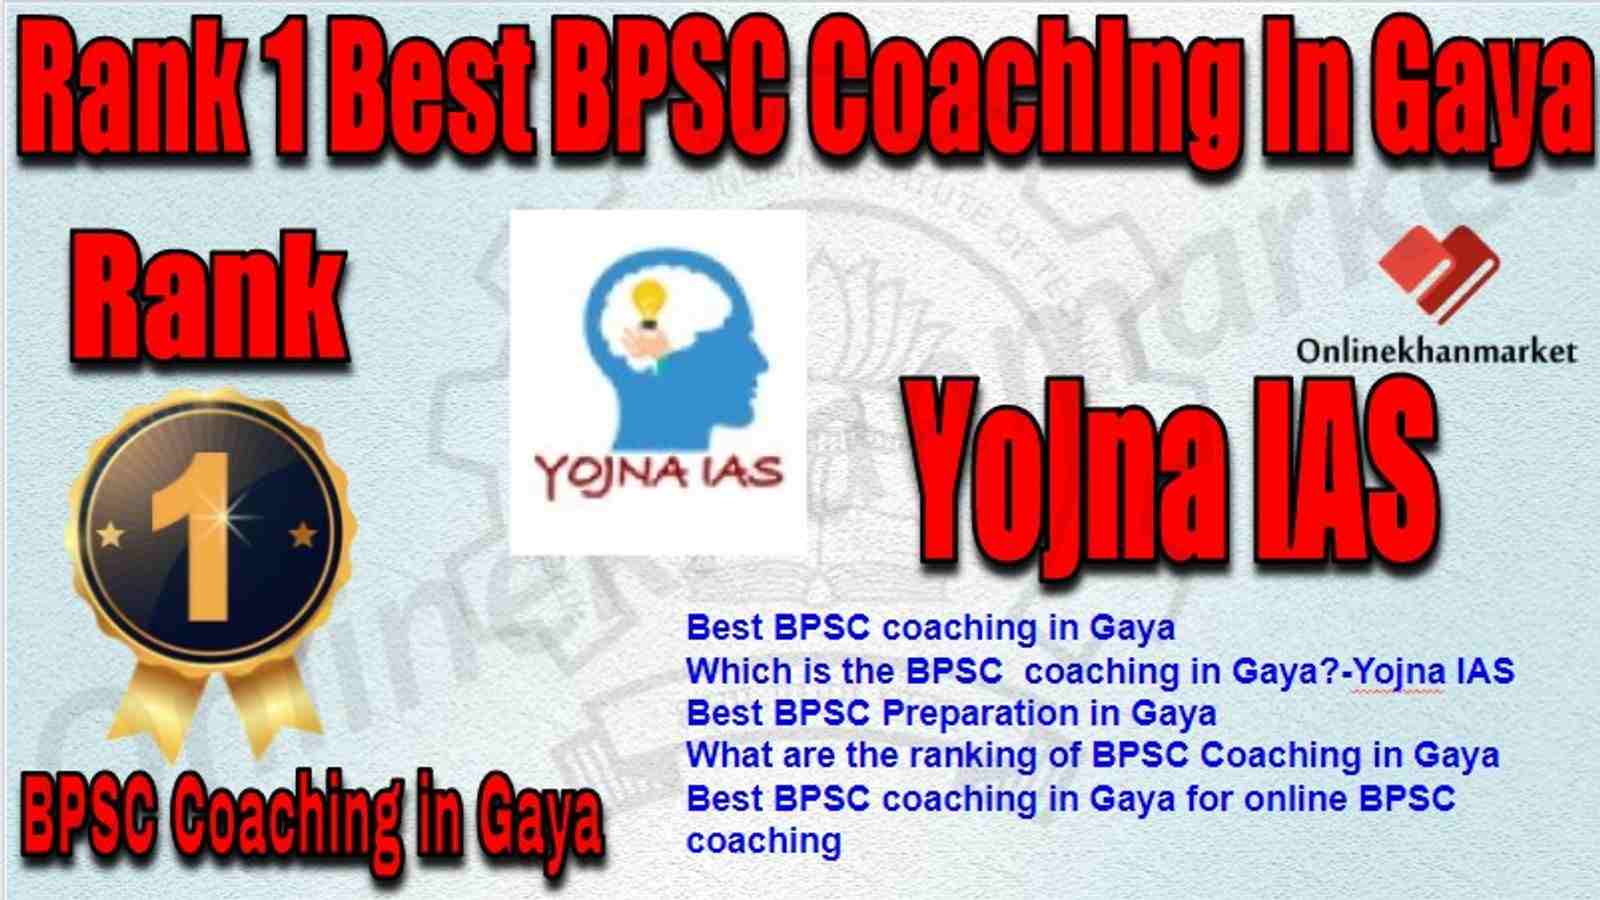 Rank 1 Best BPSC Coaching in gaya